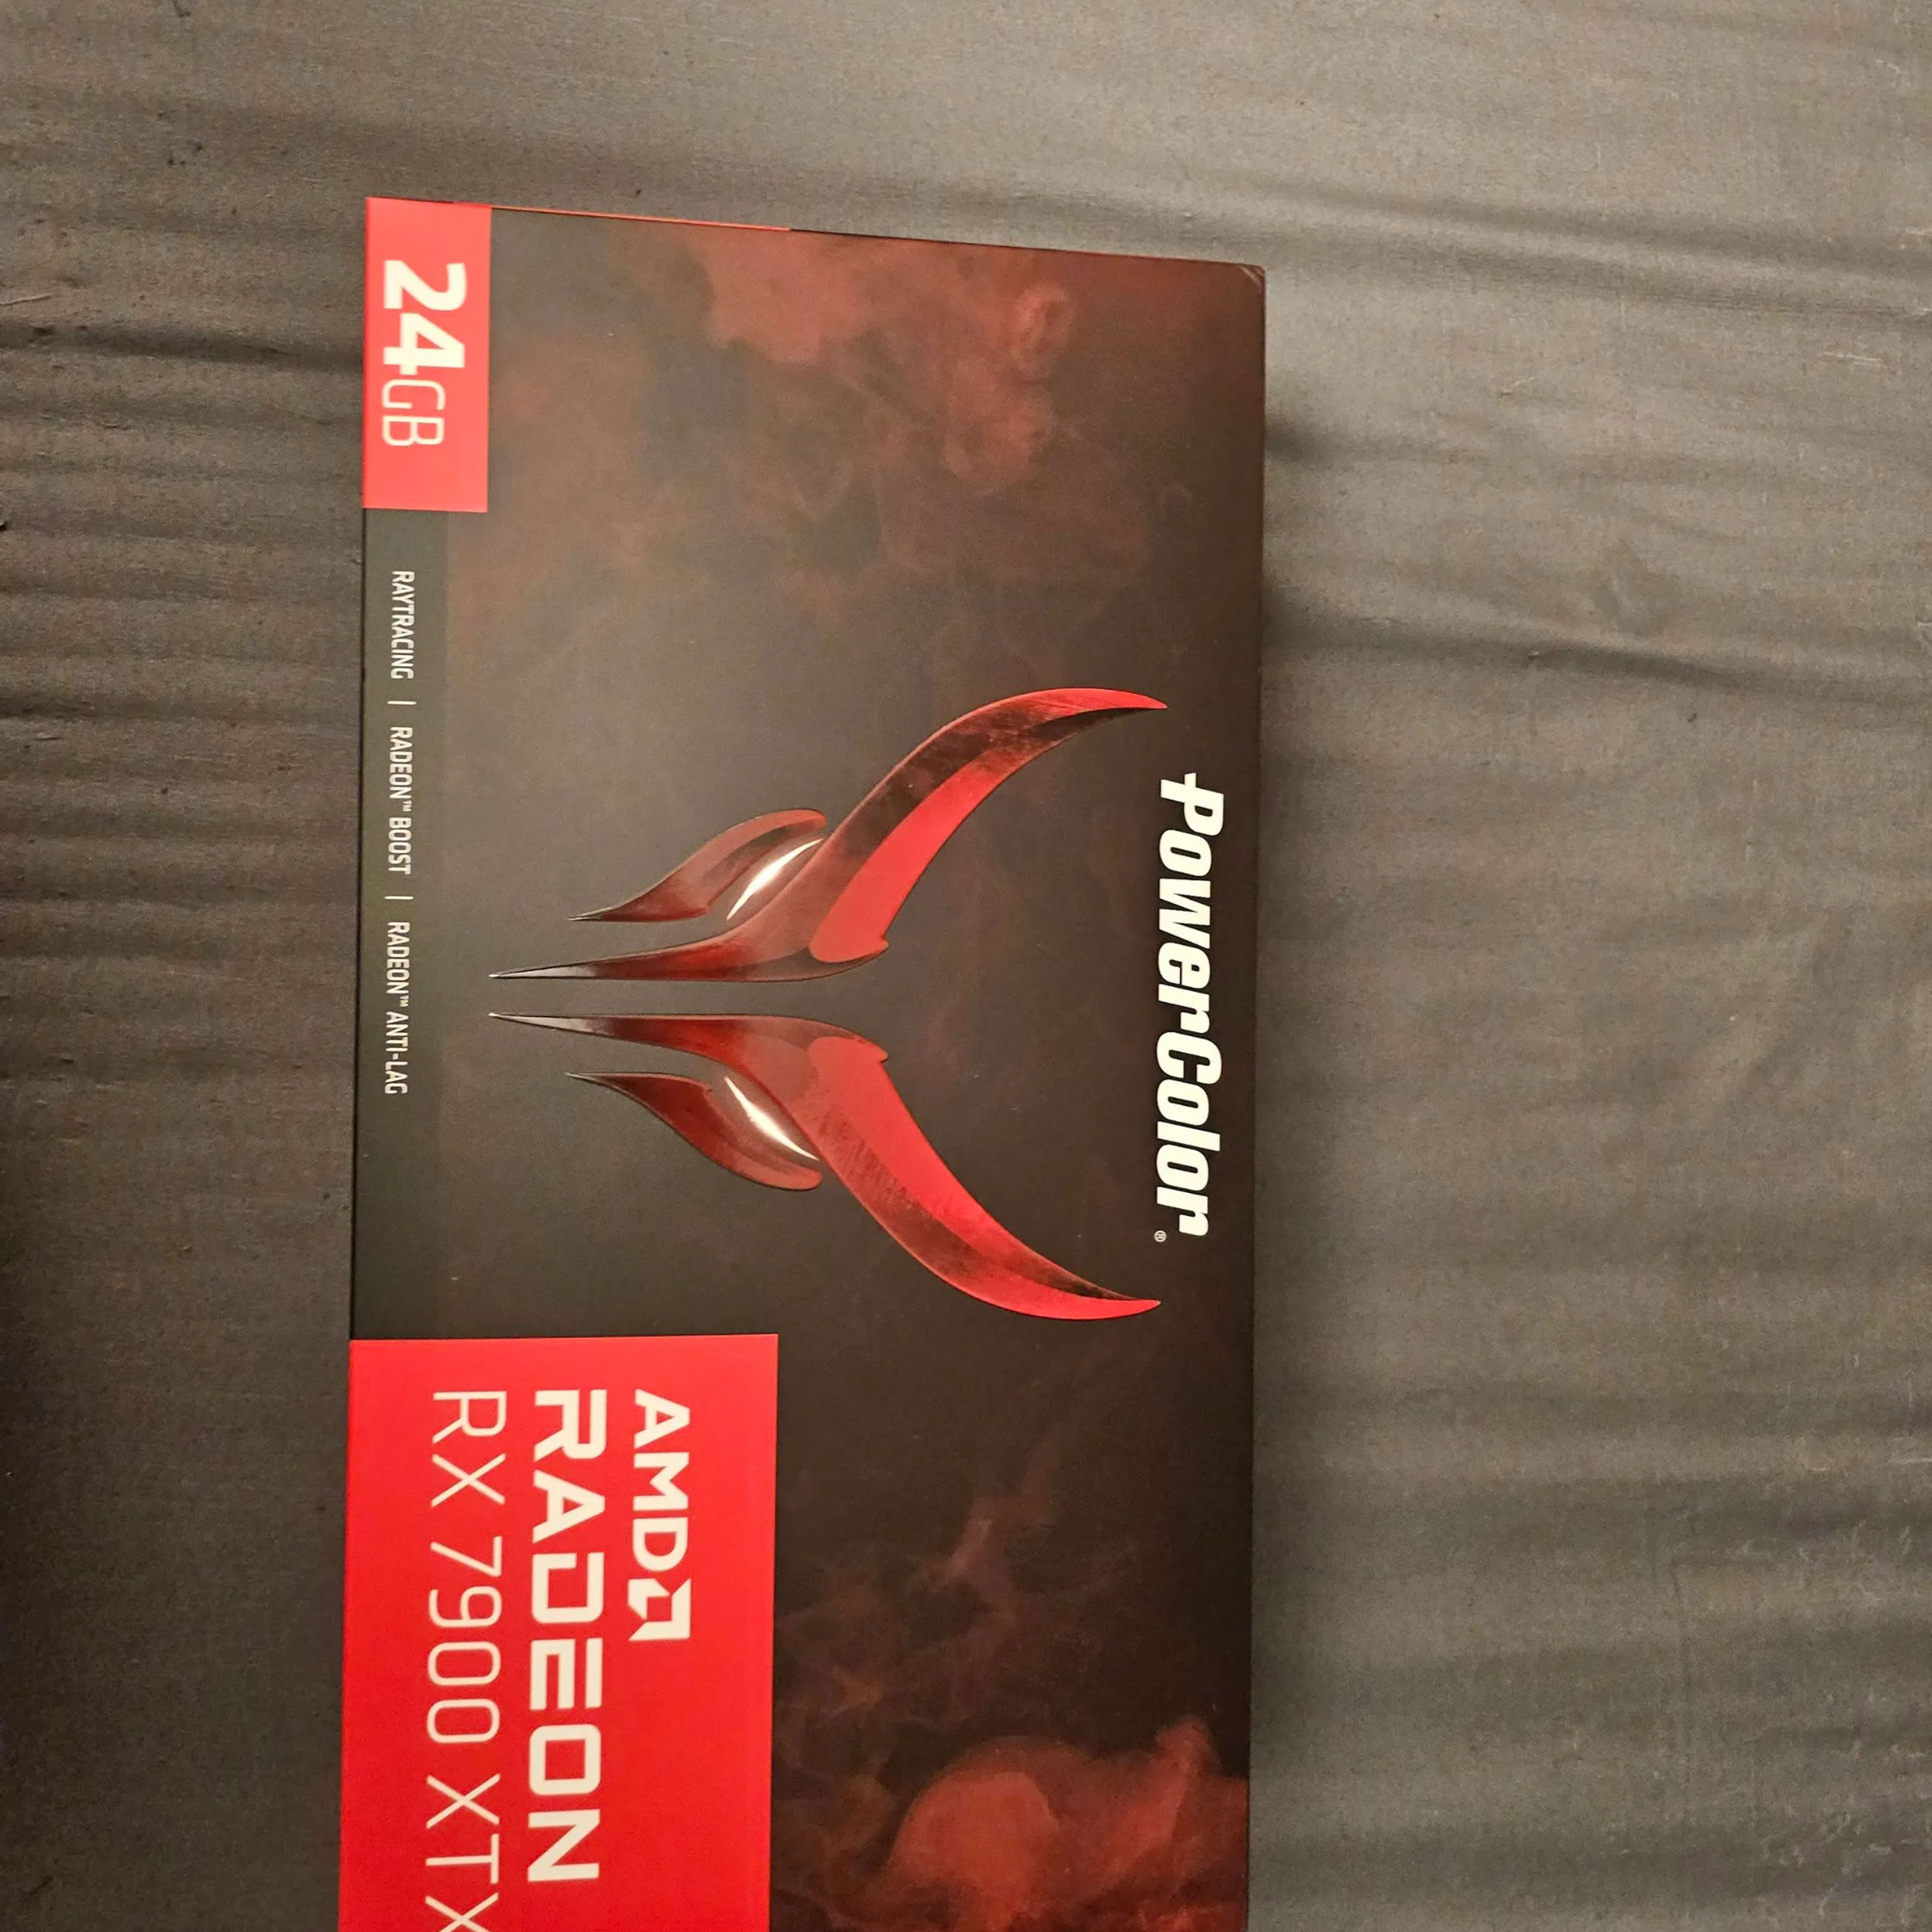 AMD Radeon 7900 xtx PowerColor Red Devil BNIB